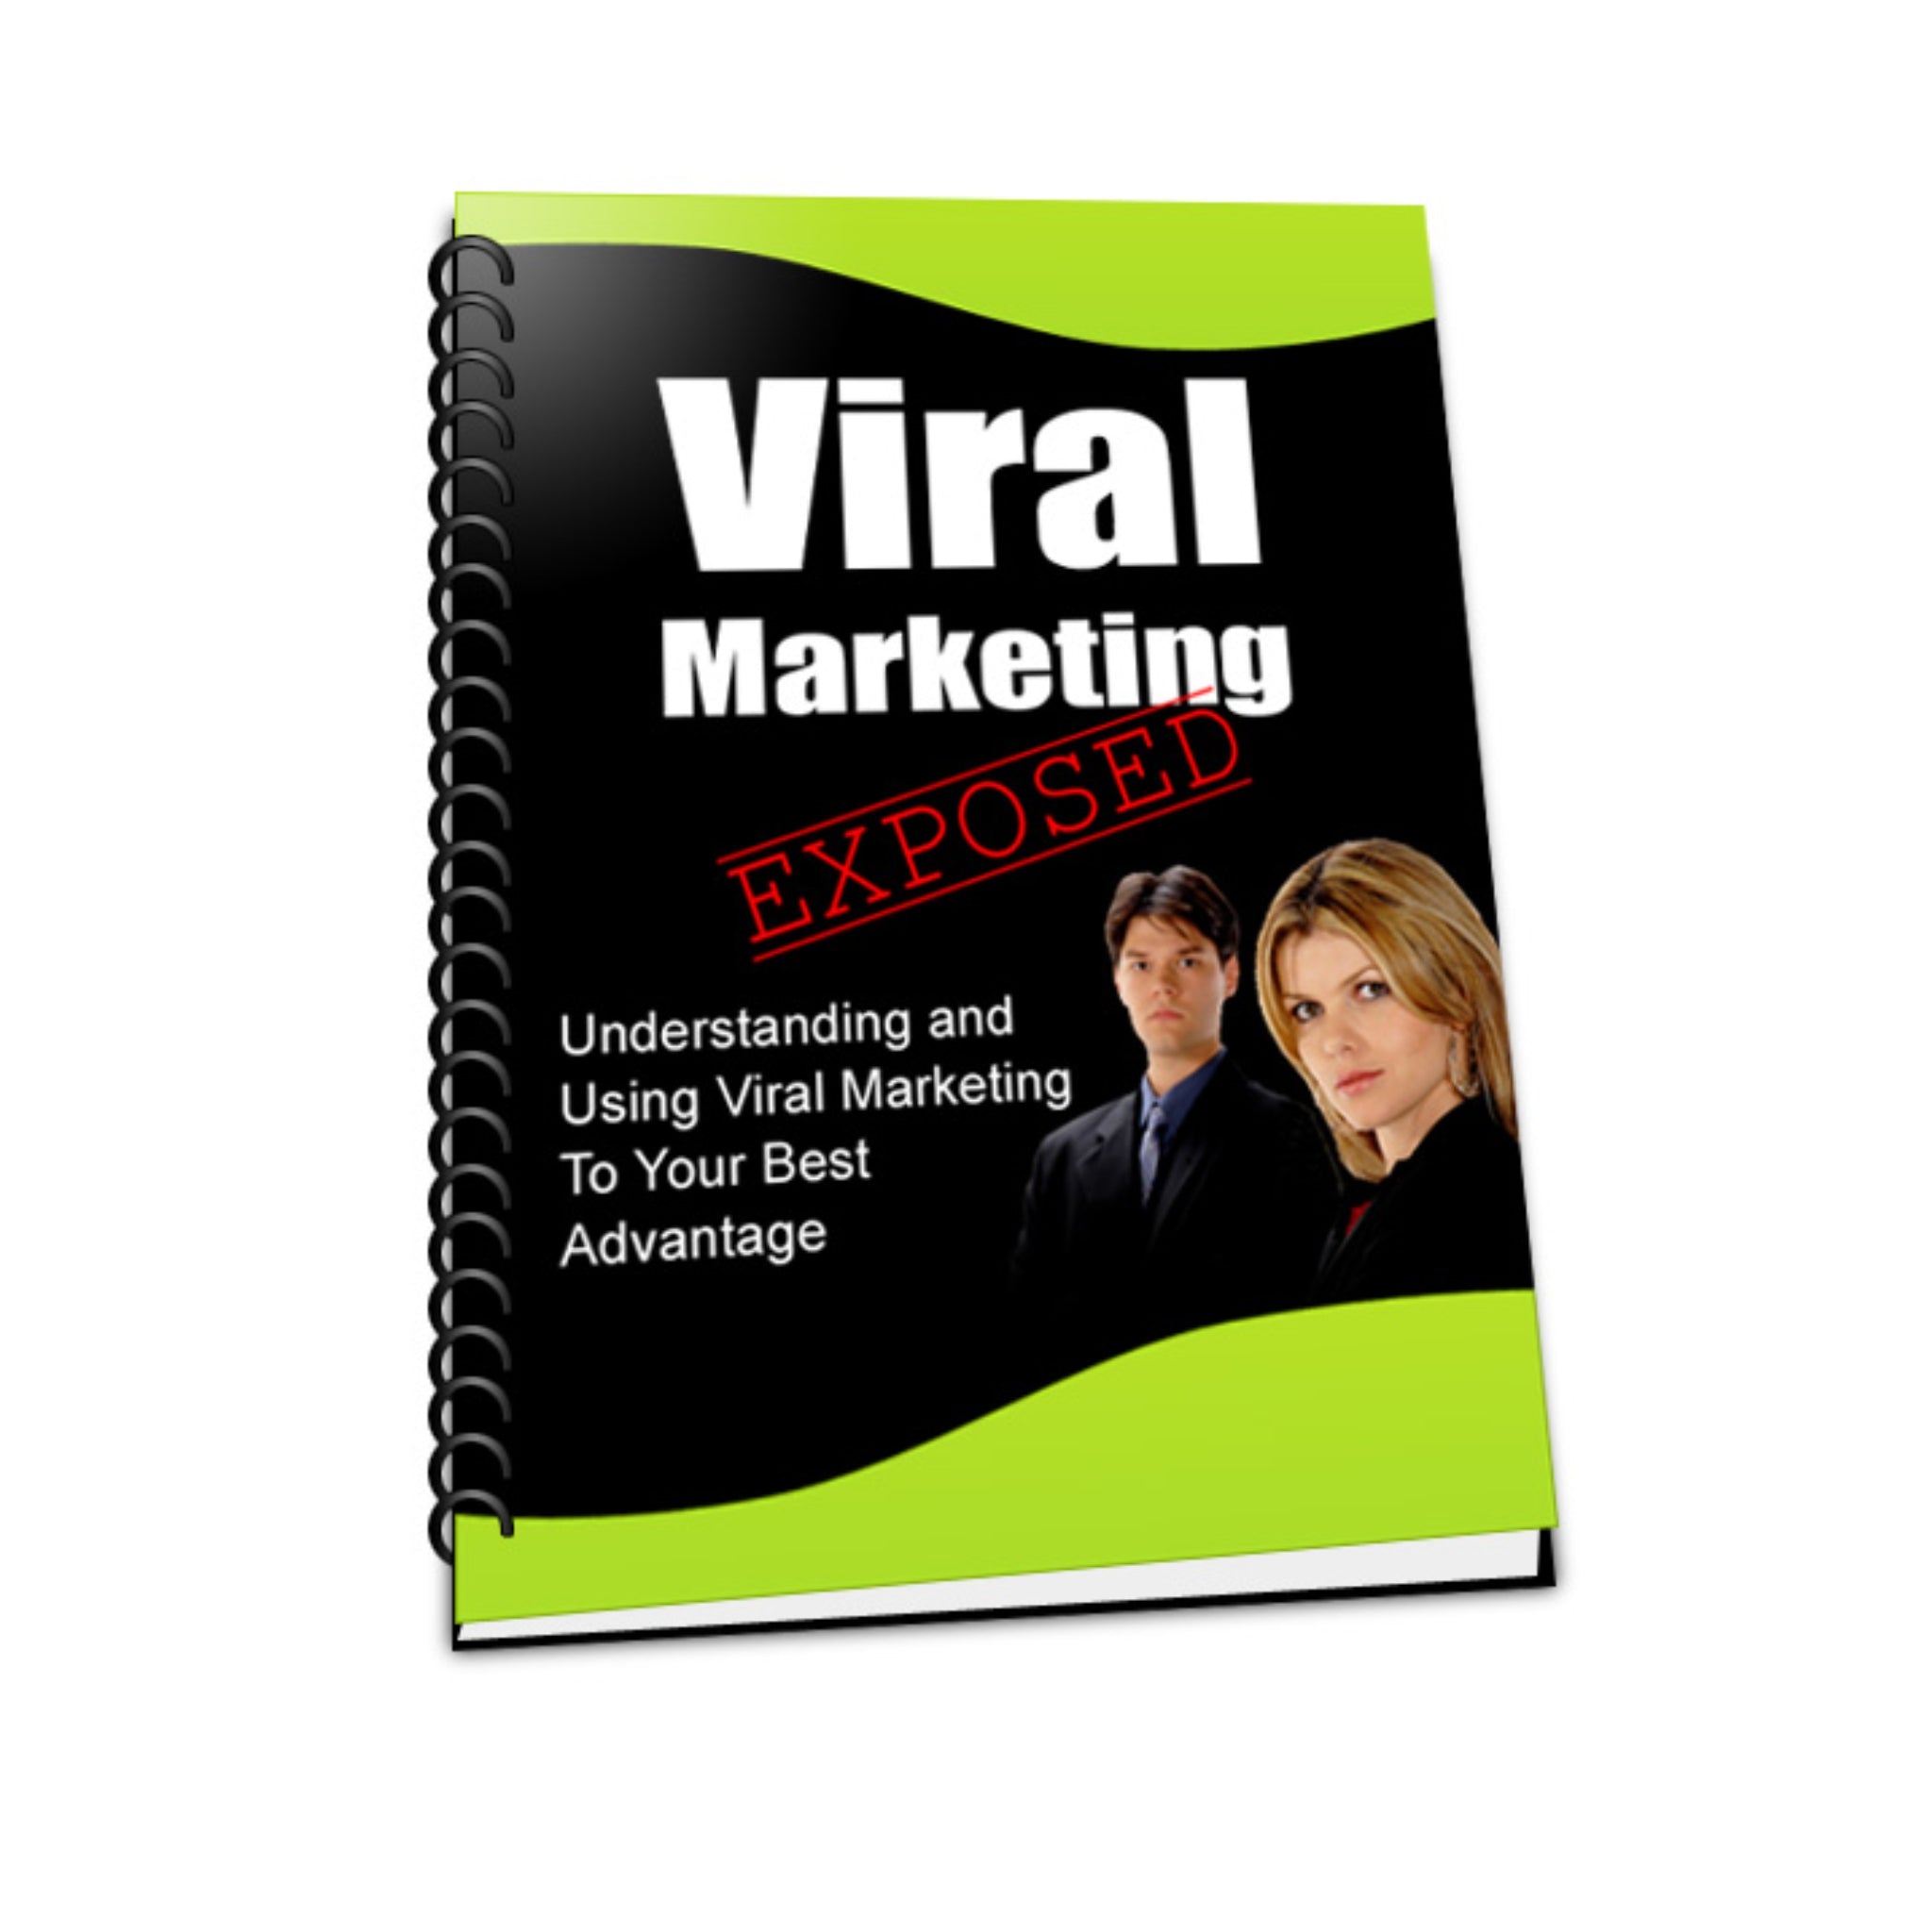 Viral Marketing Exposed Ebook